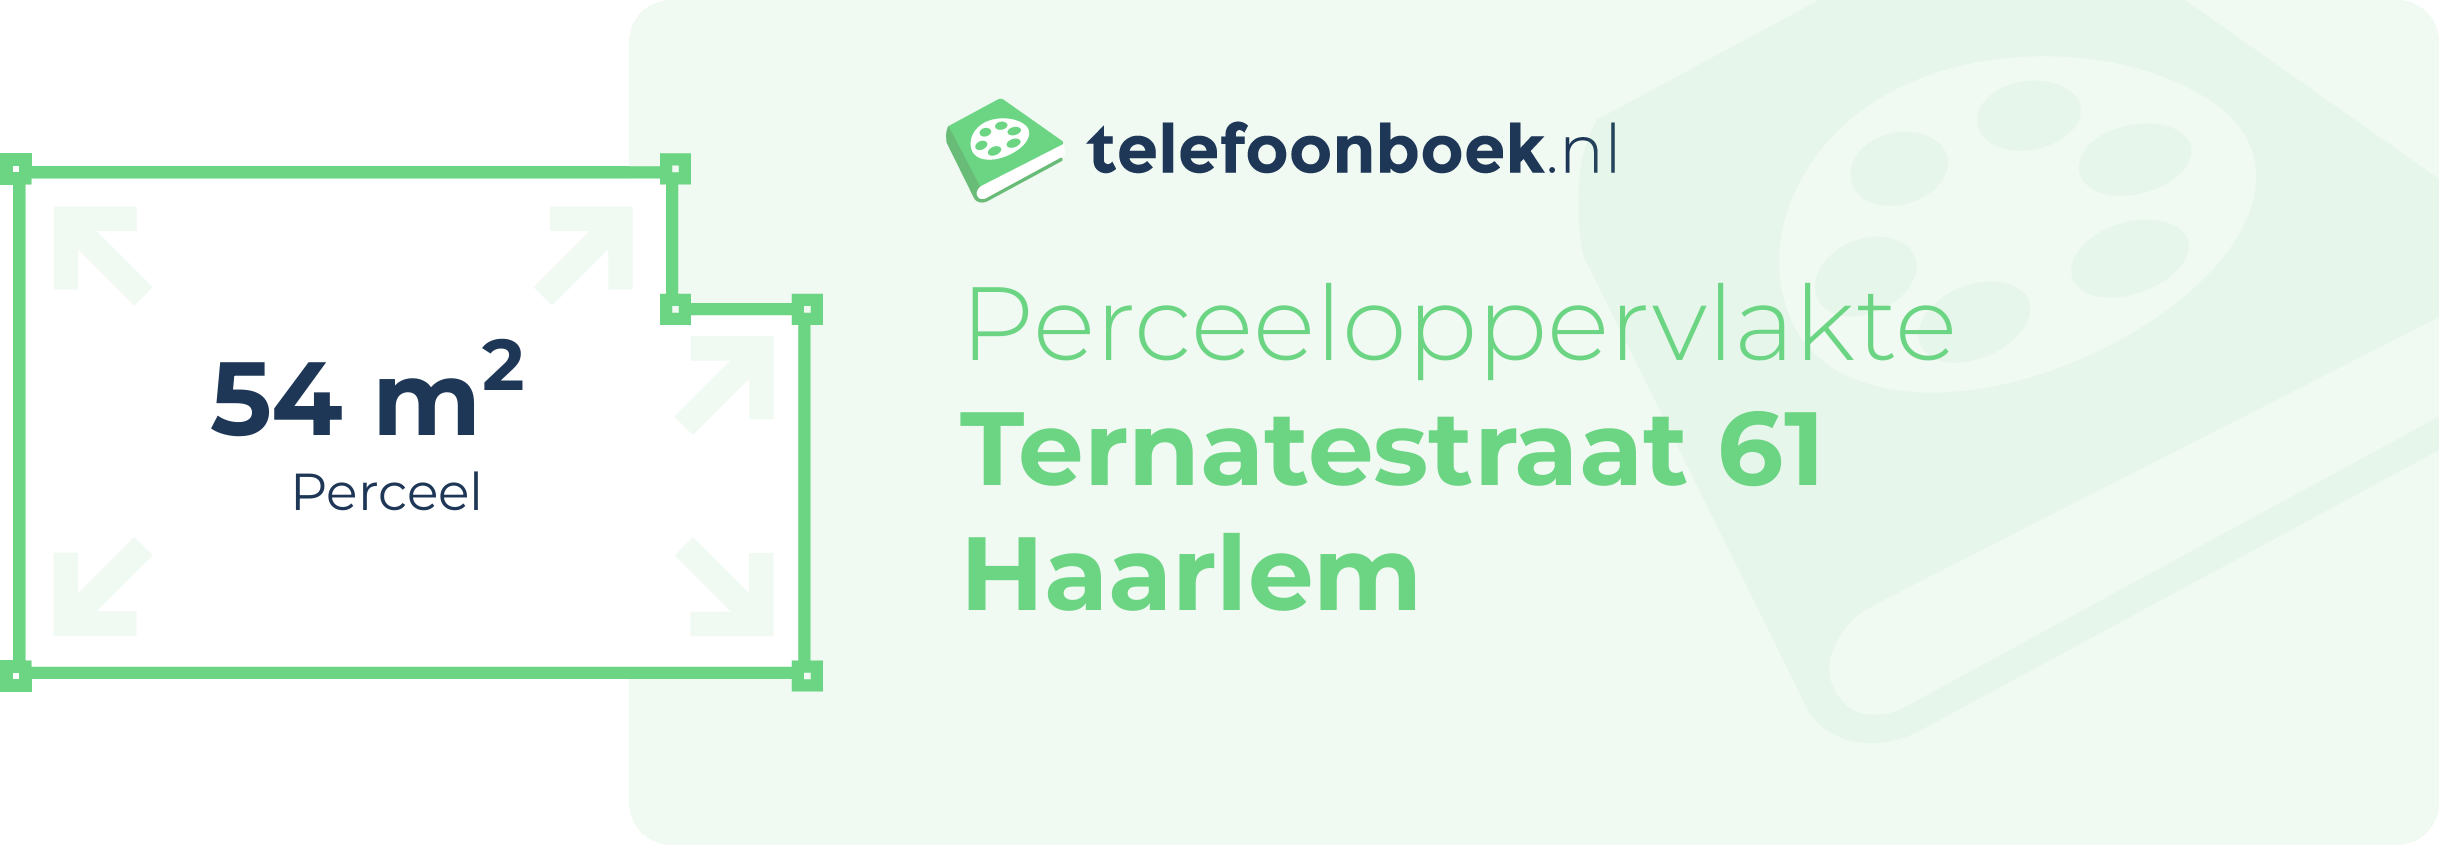 Perceeloppervlakte Ternatestraat 61 Haarlem